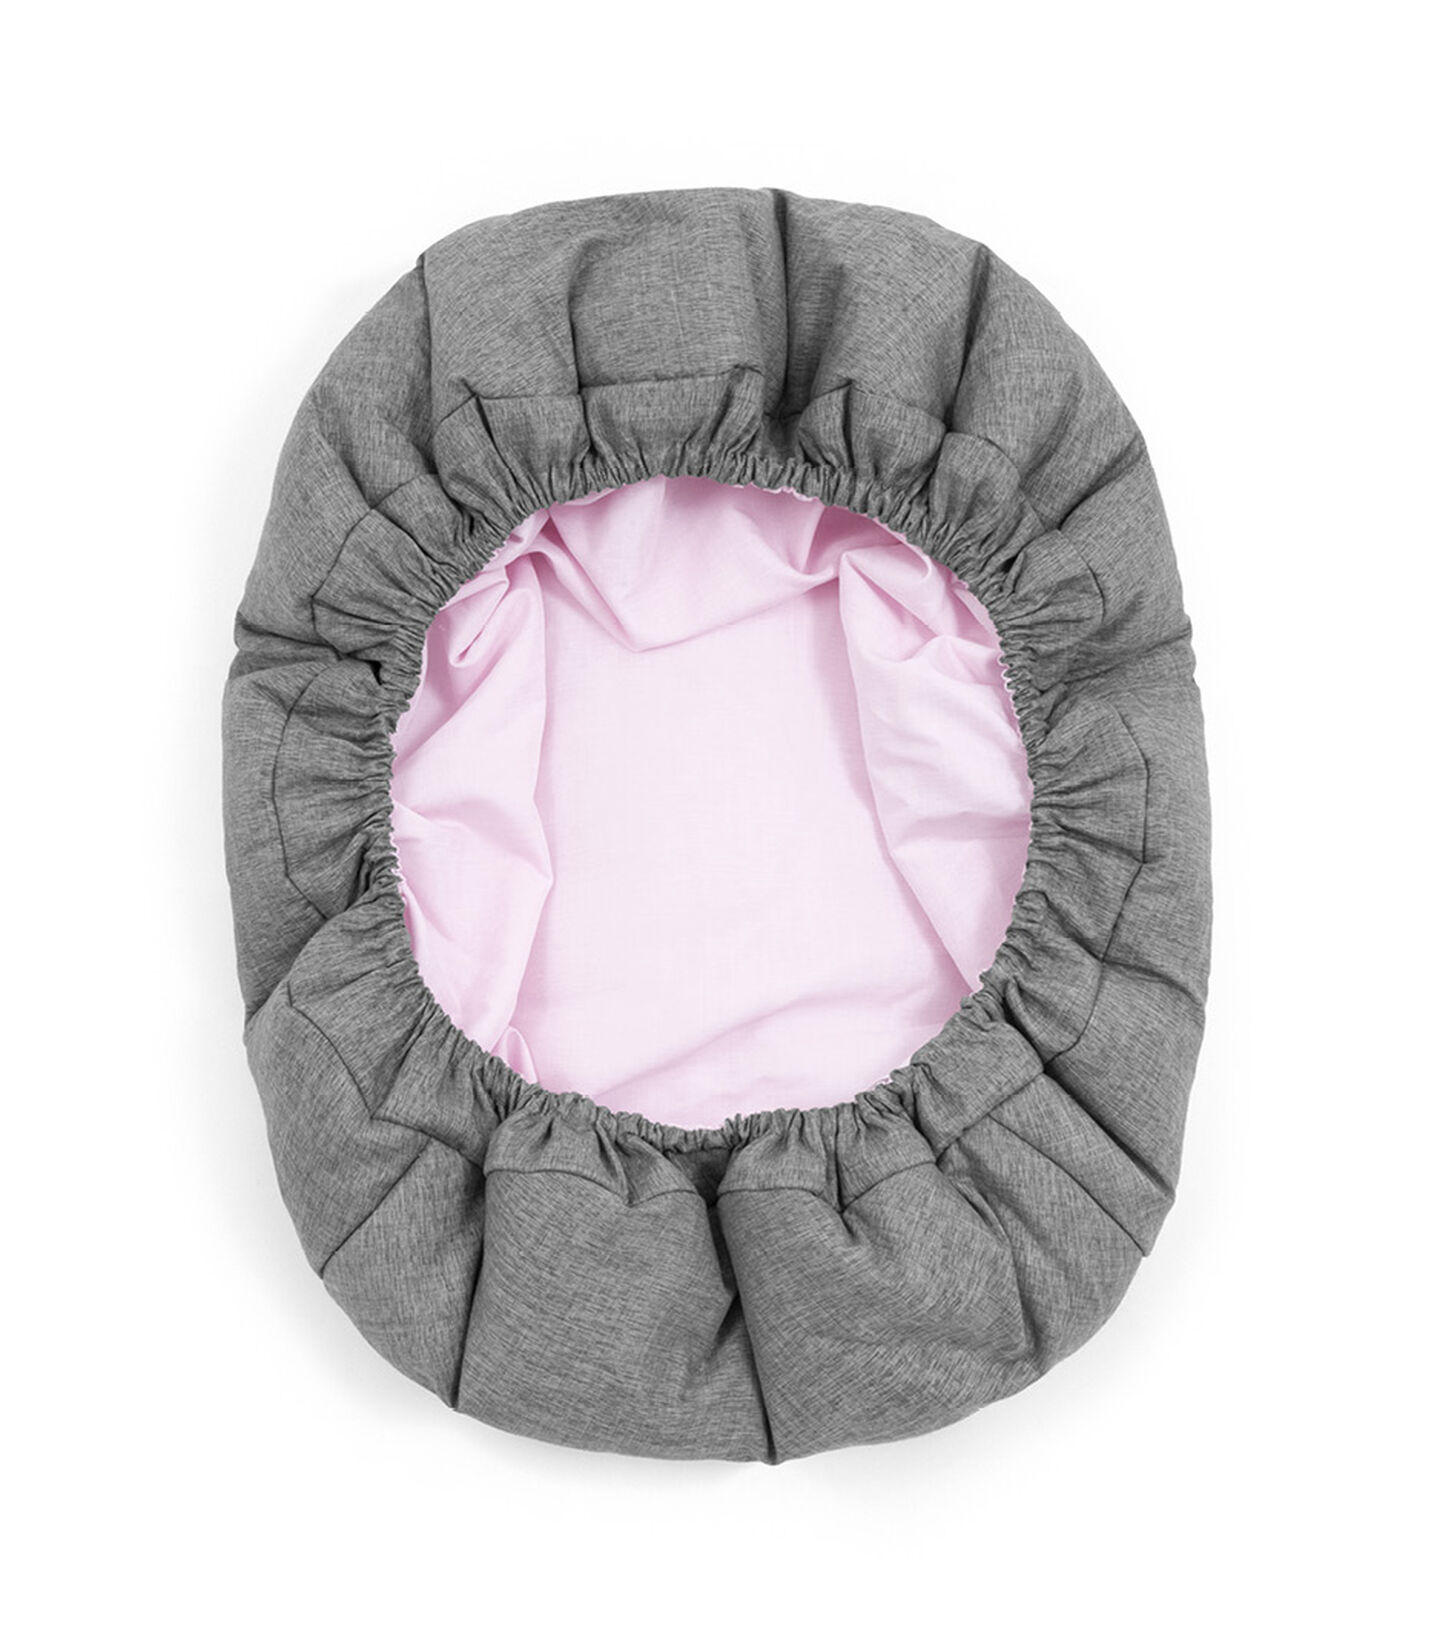 Stokke® Nomi® Newborn Set White / Grey Pink, White Grey pink, mainview view 8